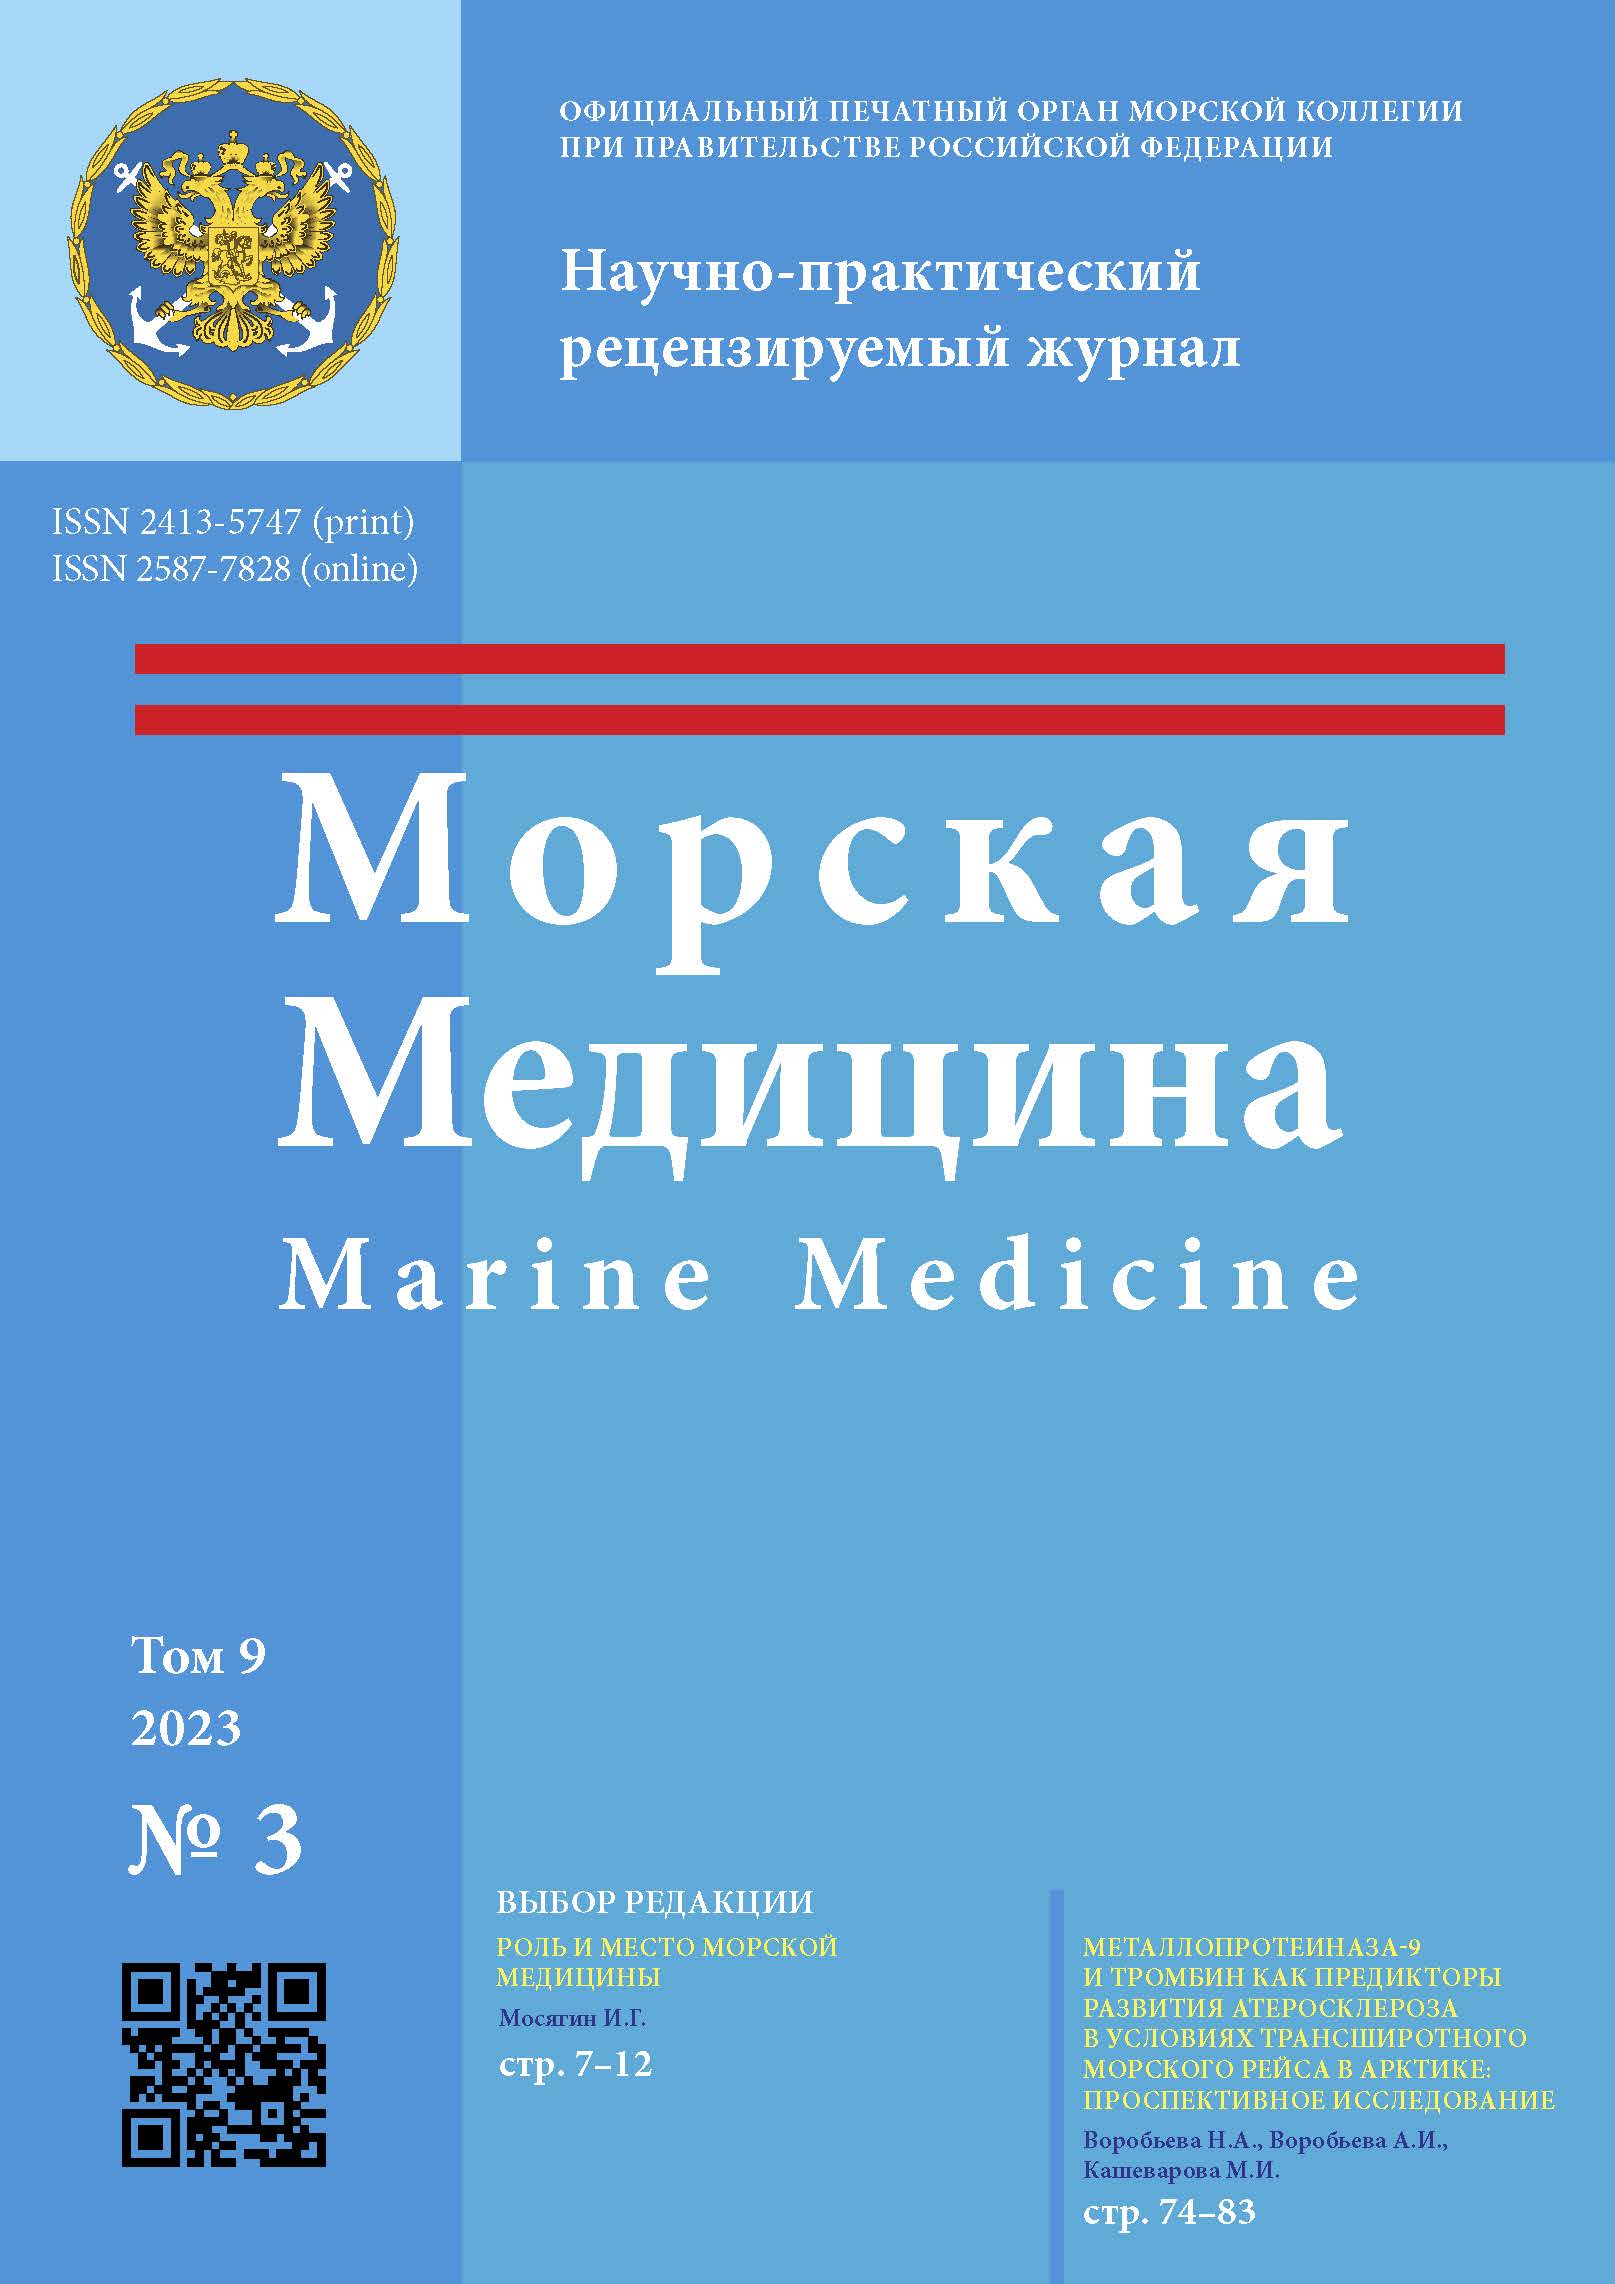 Clinical Toxicology: Vol 60, No 3